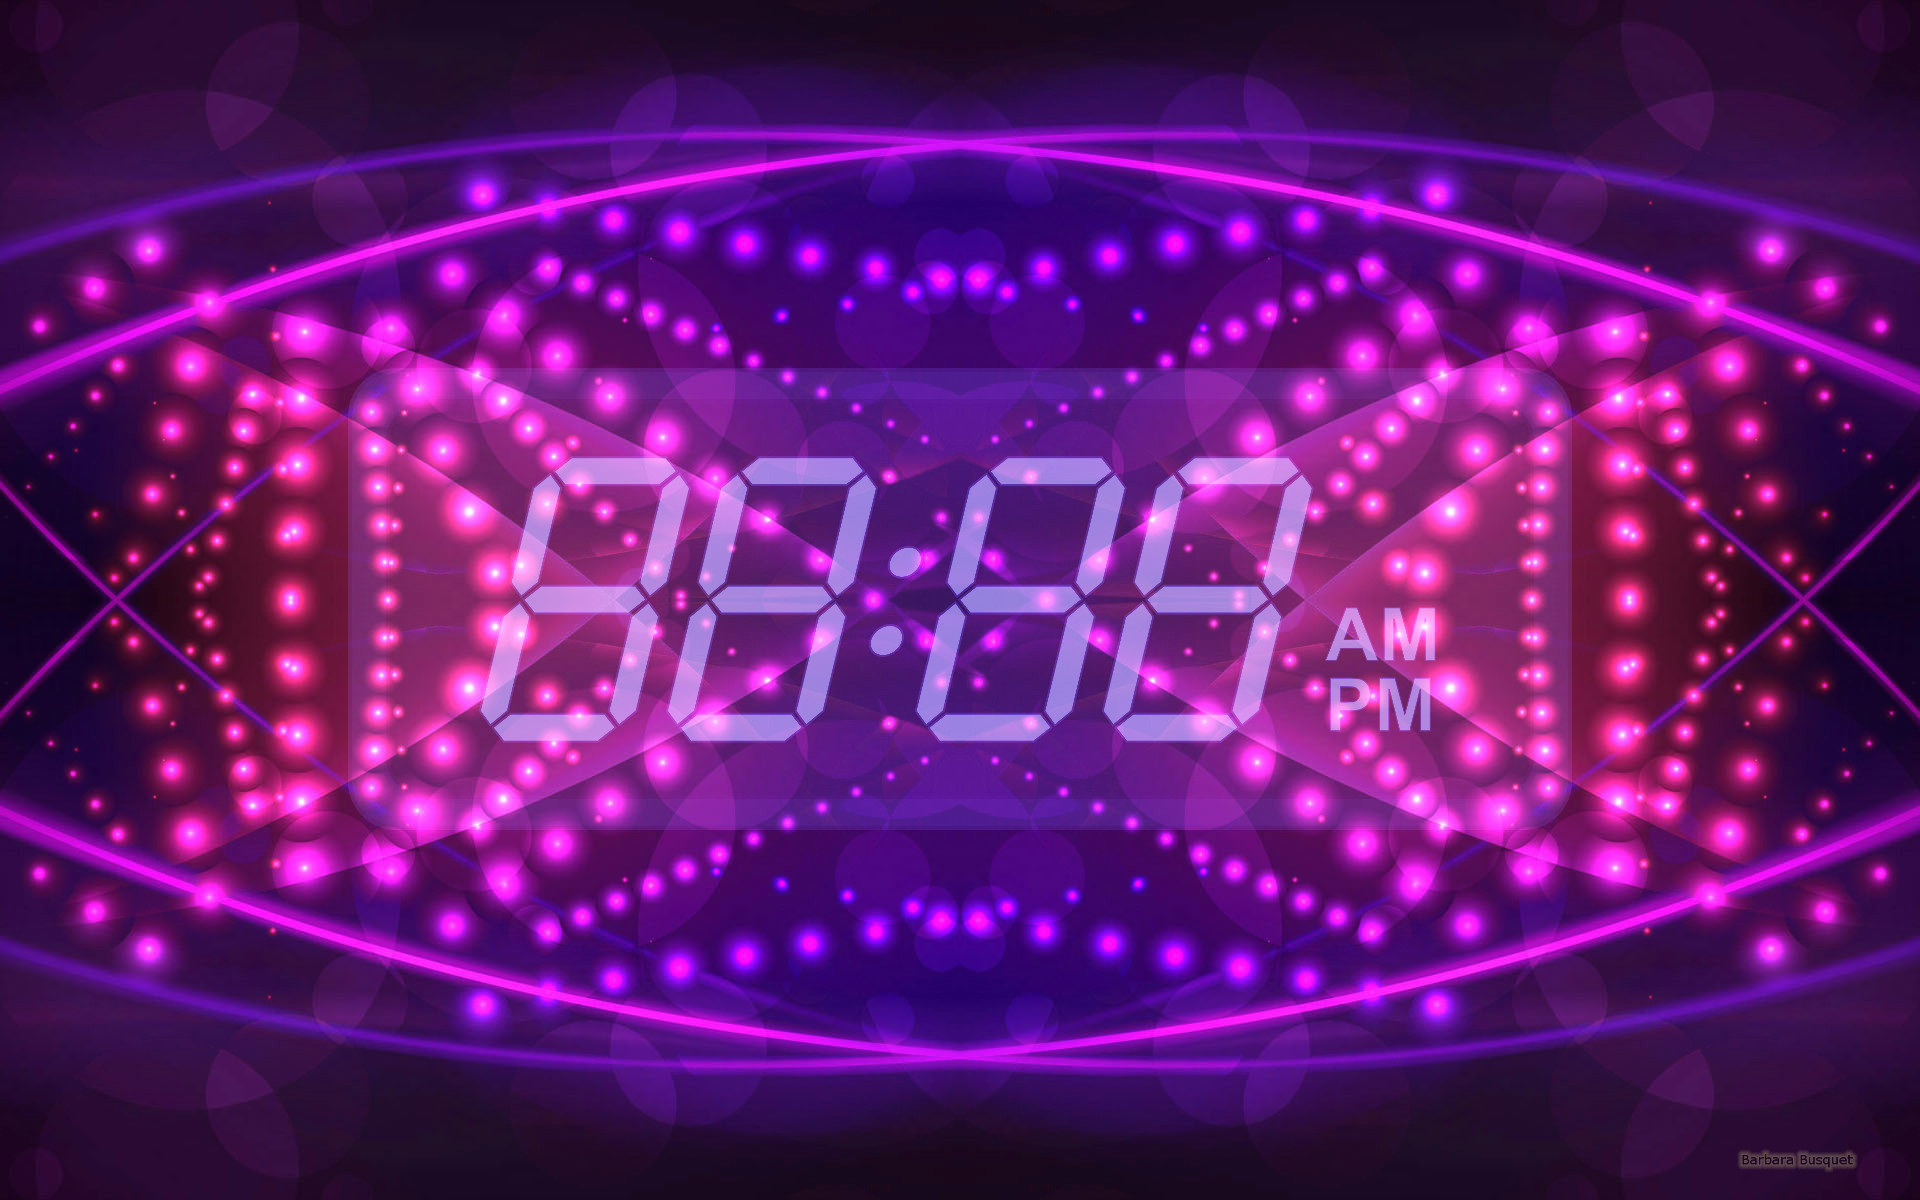 Hd Wallpaper Digital Clock On Purple Pink Background - Digital Clock Wallpaper Hd - HD Wallpaper 